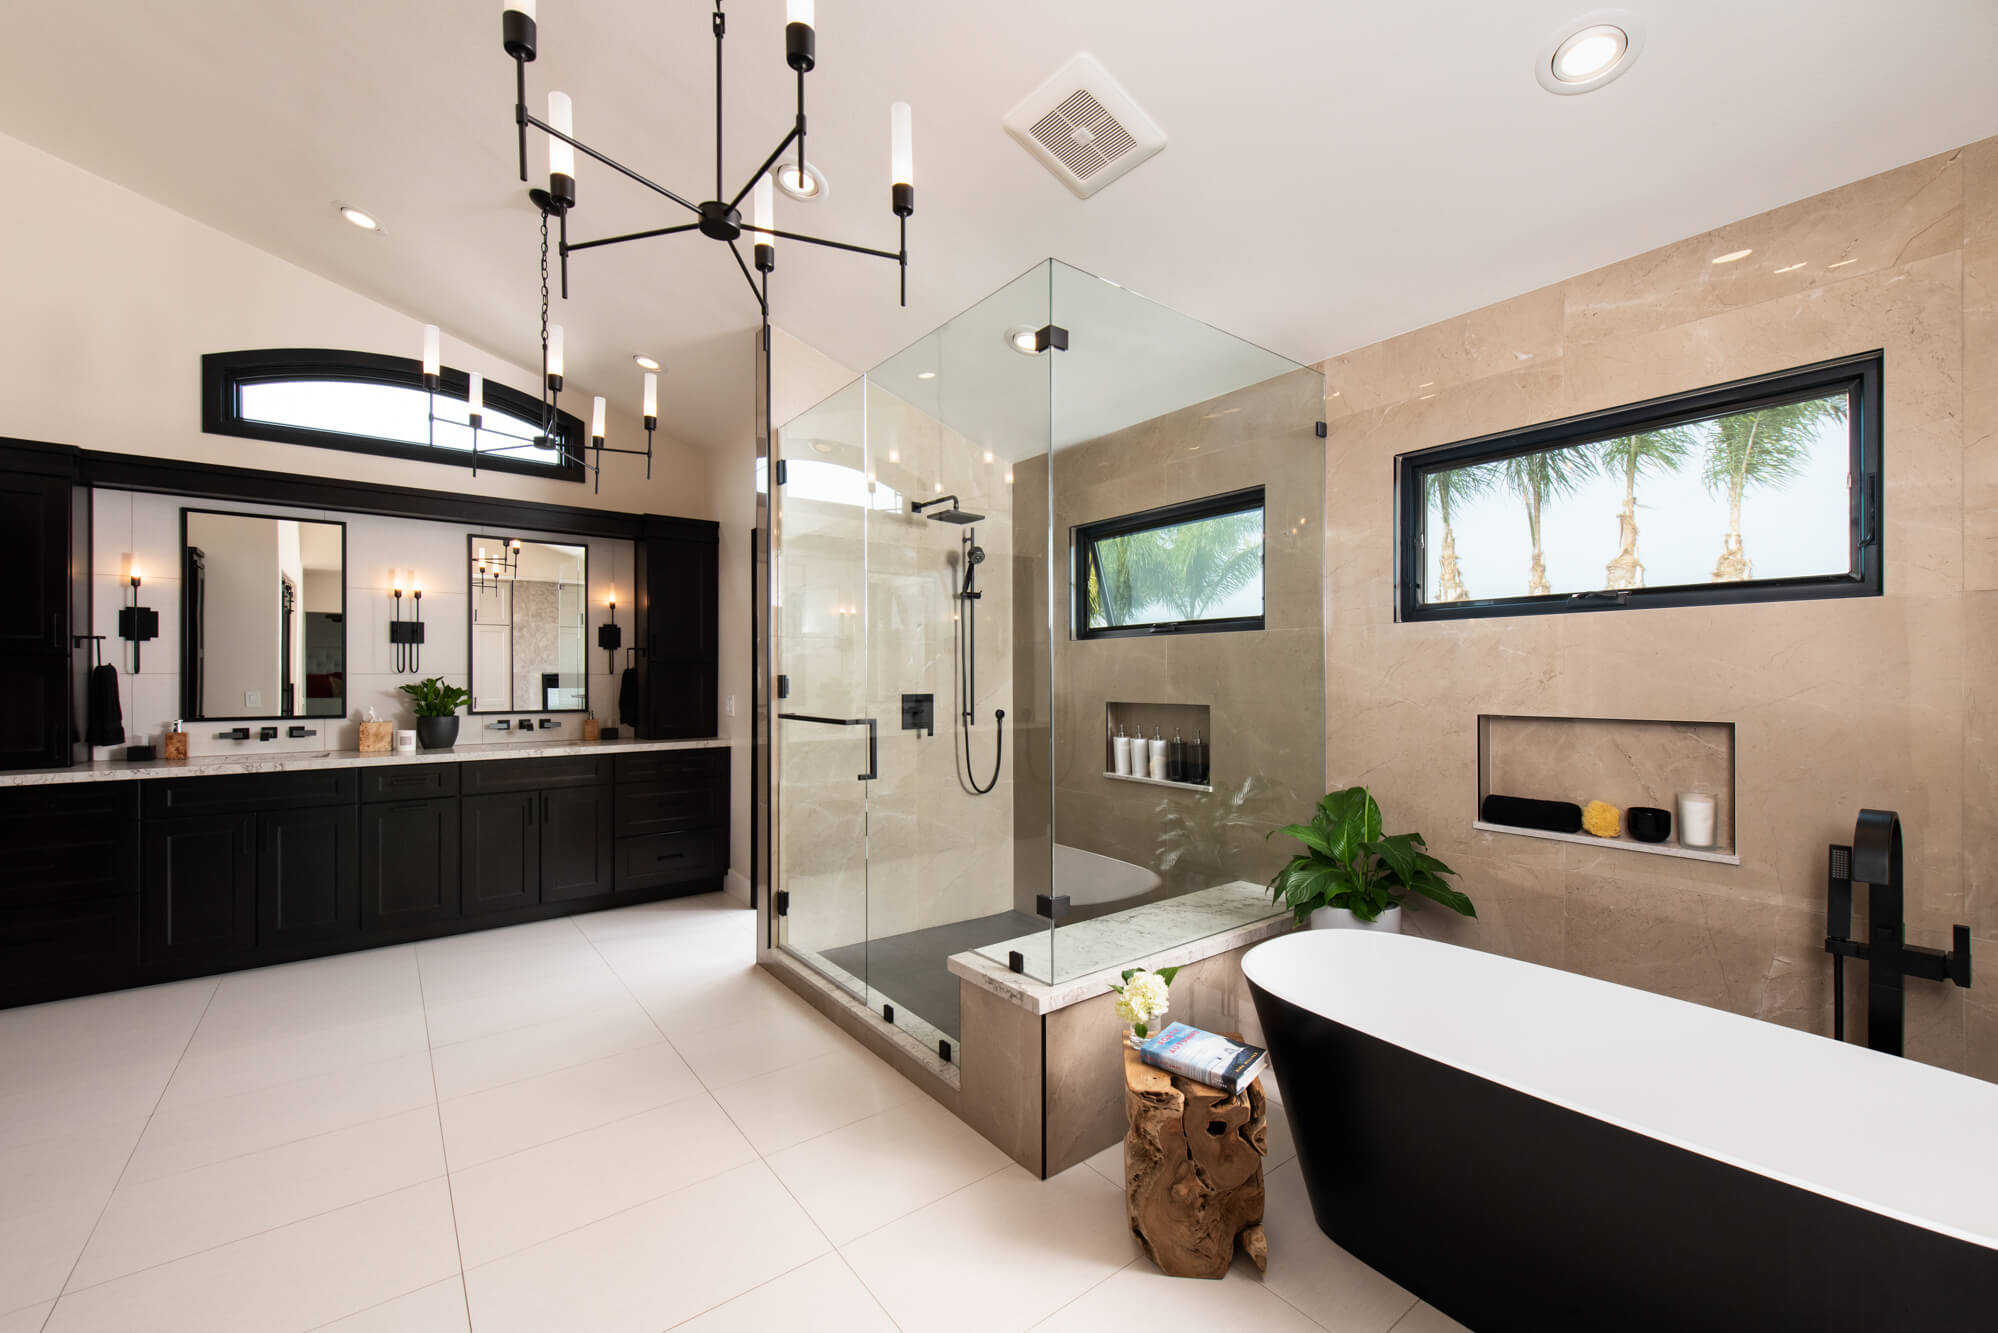 How to Create a Spa-Like Bathroom at Home